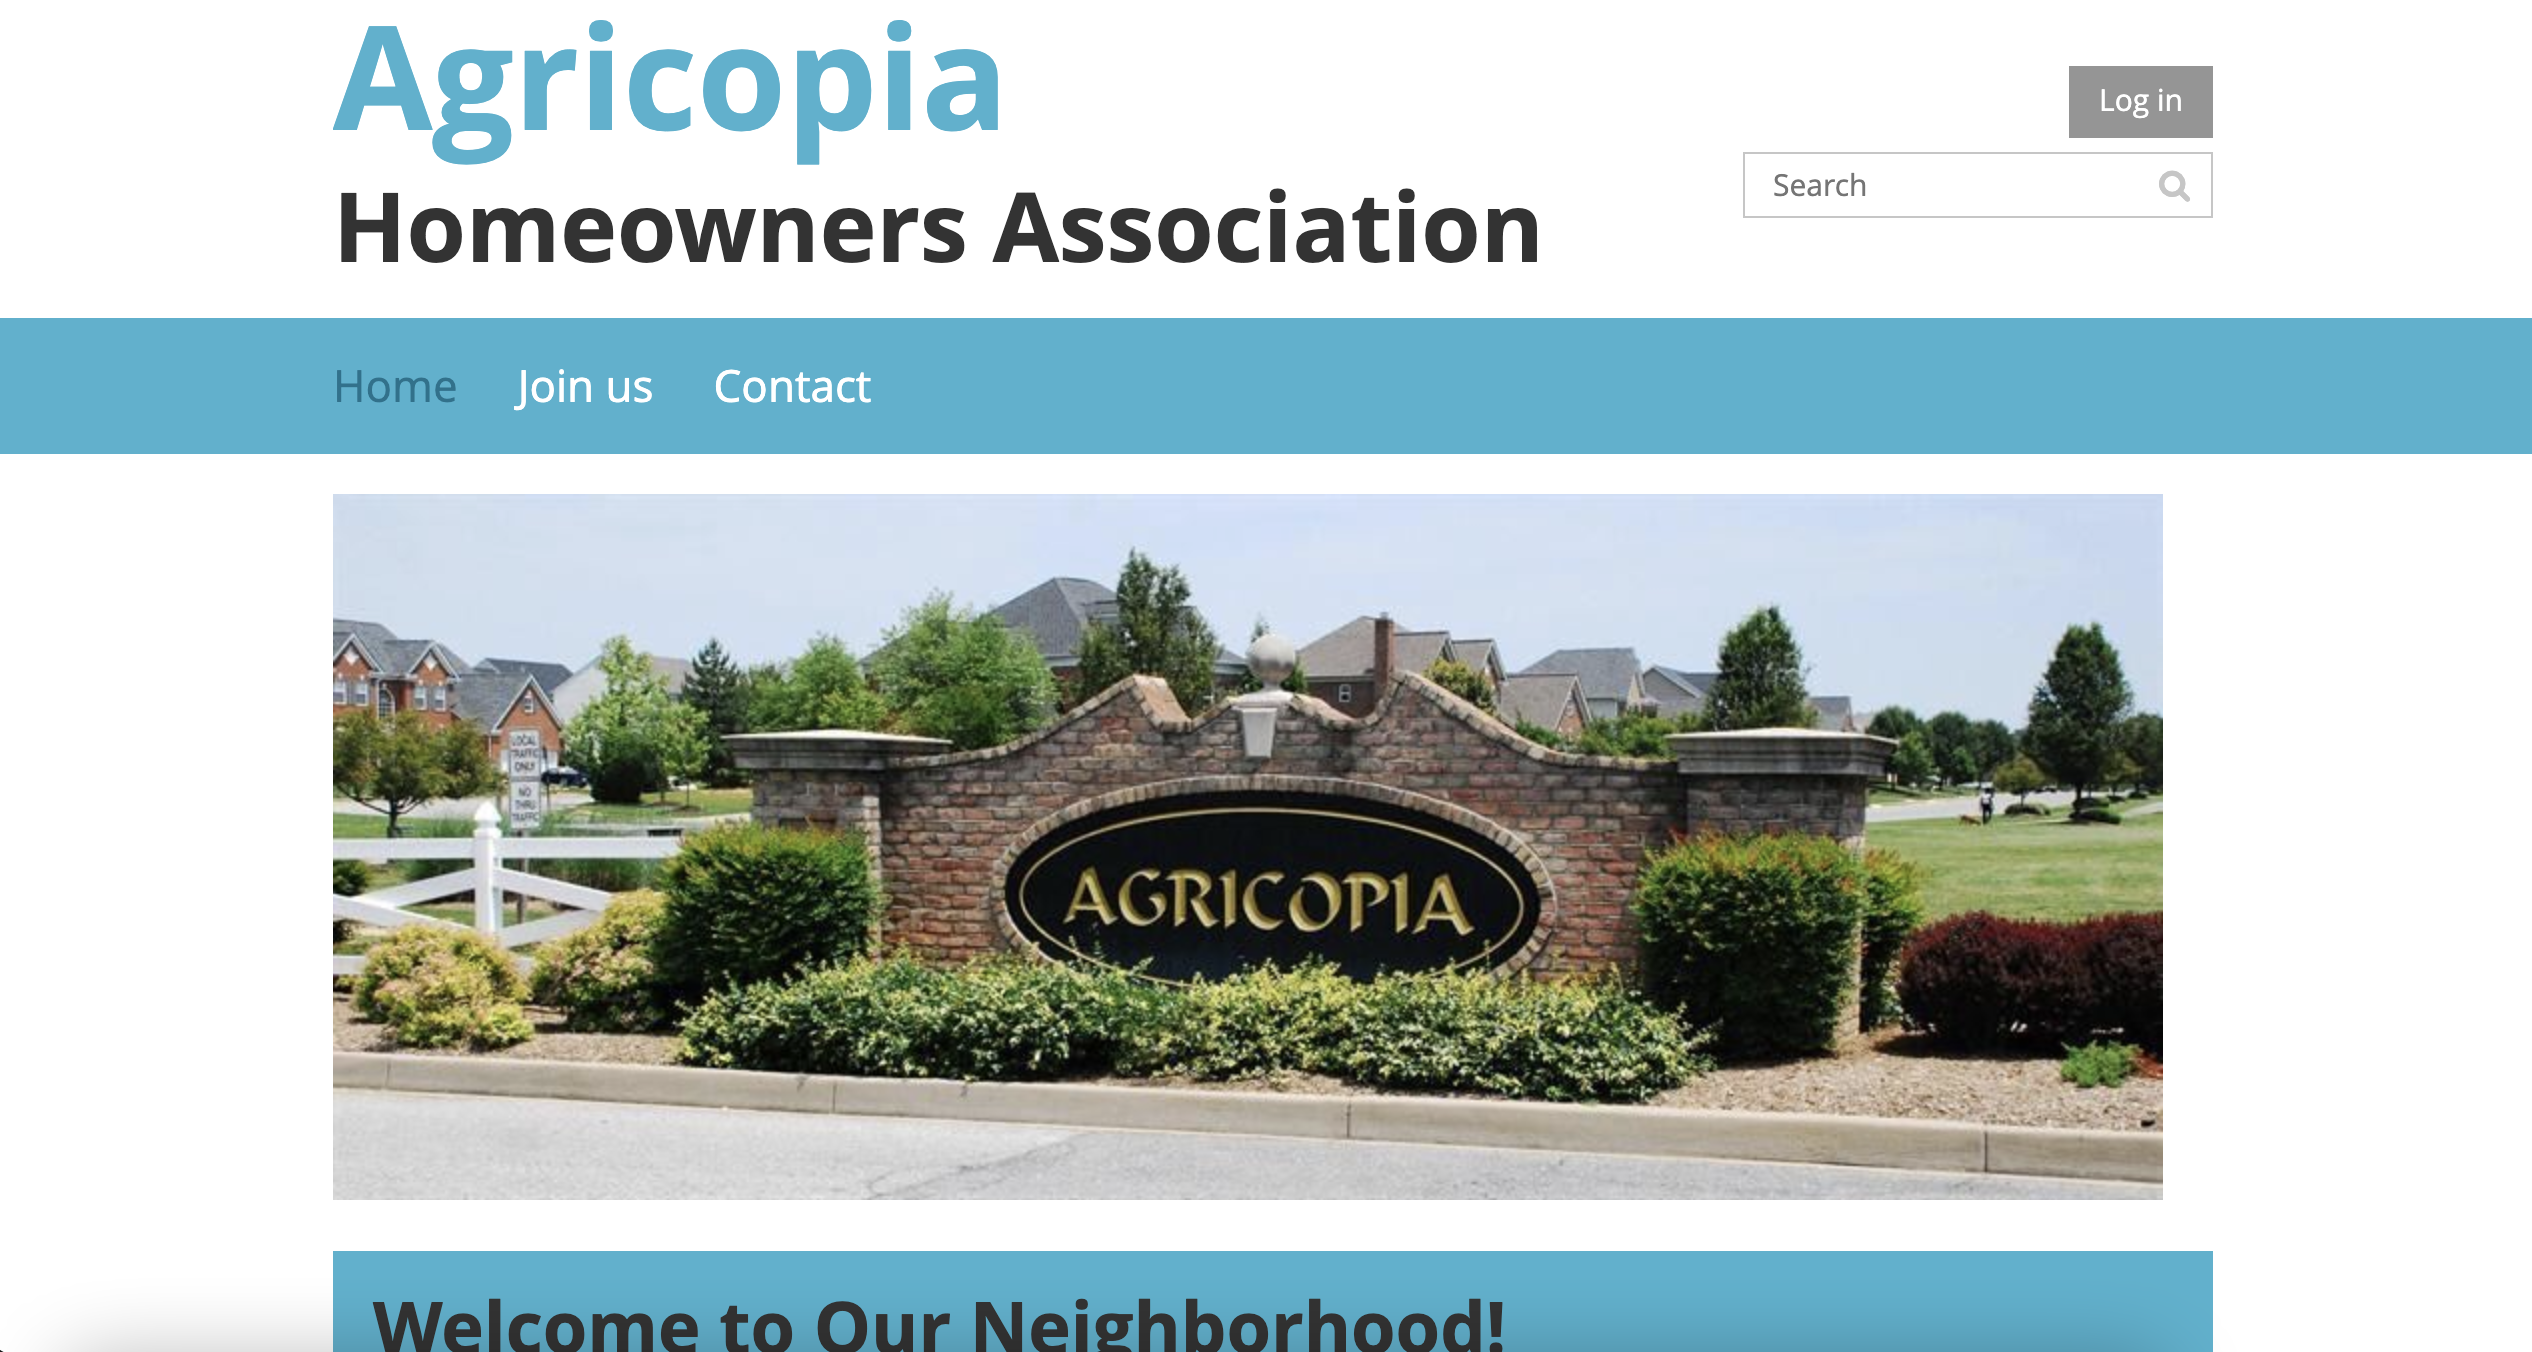 HOA Website example - Agricopia